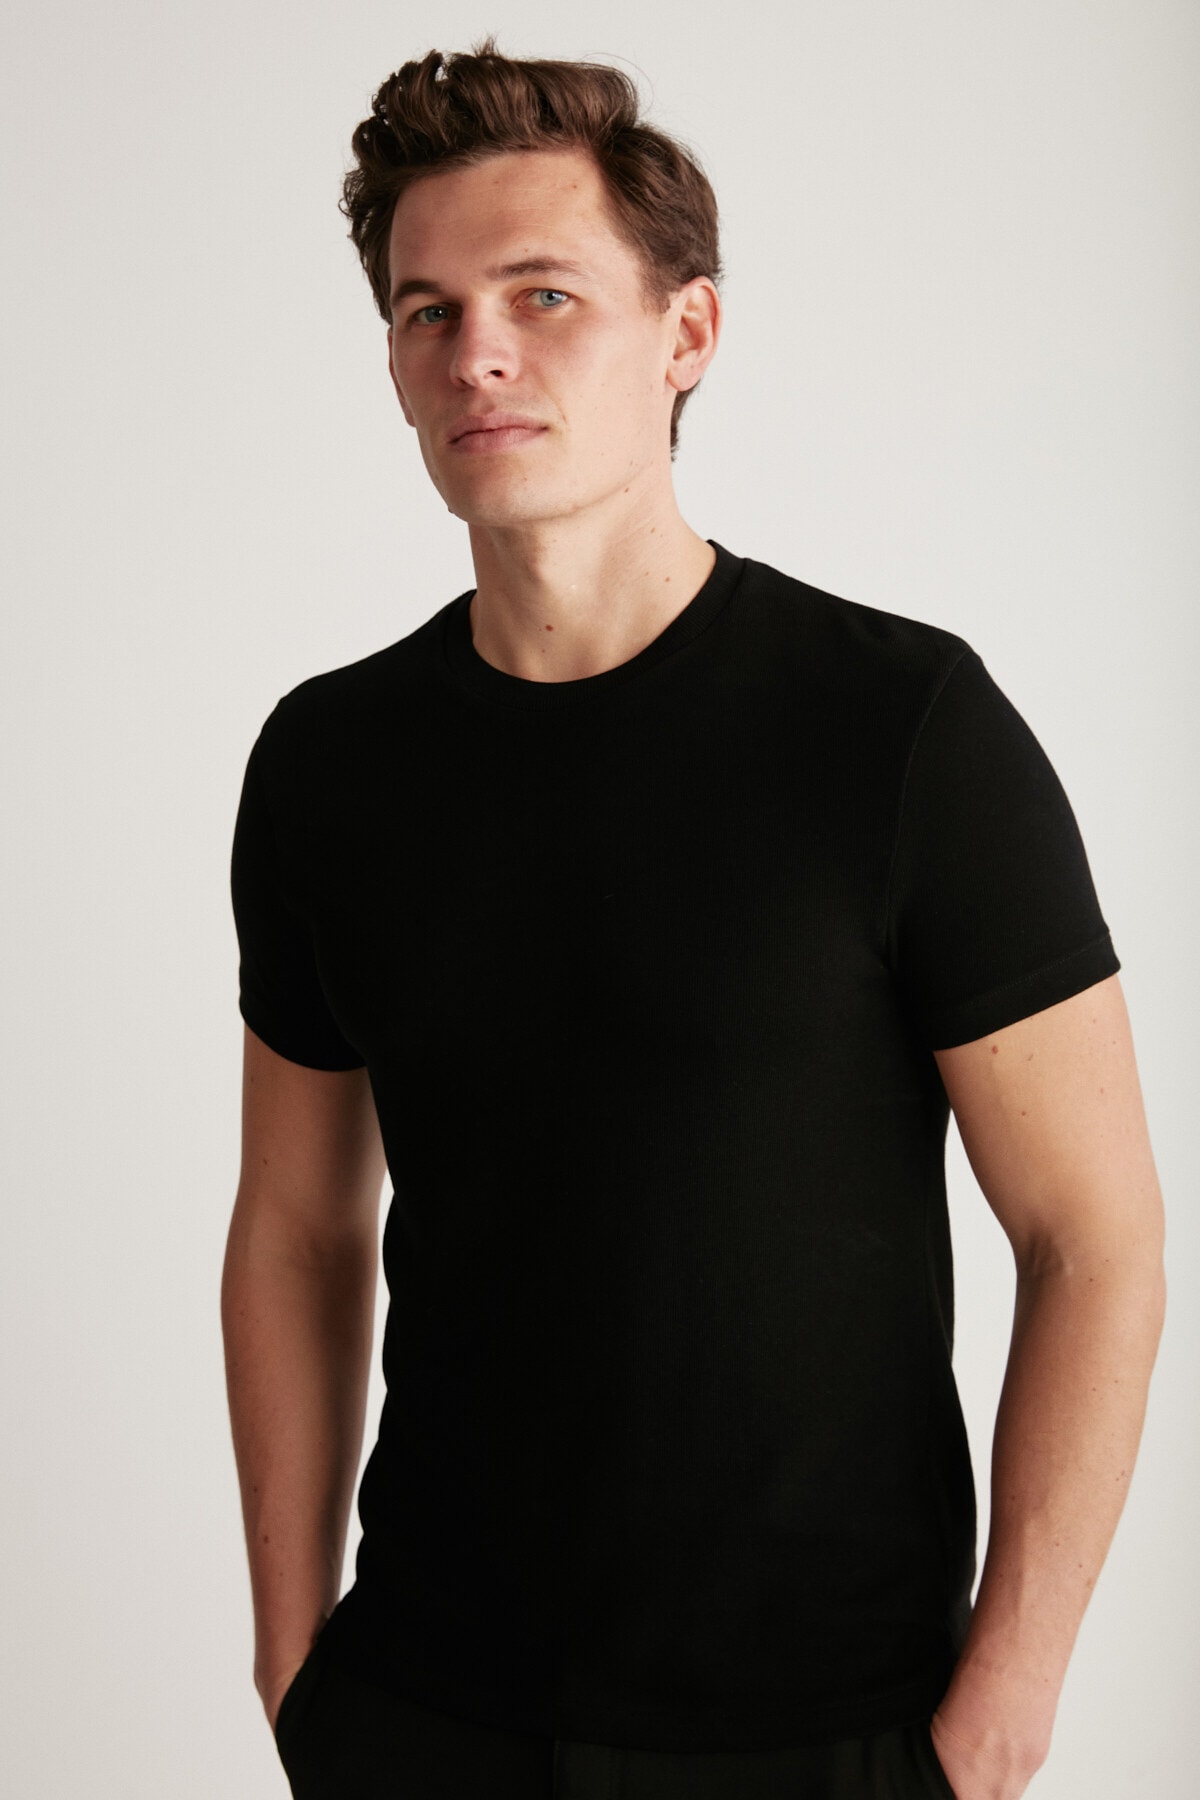 GRIMELANGE Jeremy Men's Slim Fit Knitwear-Looking Fabric Knitwear Collar Thick Textured Black T-shir